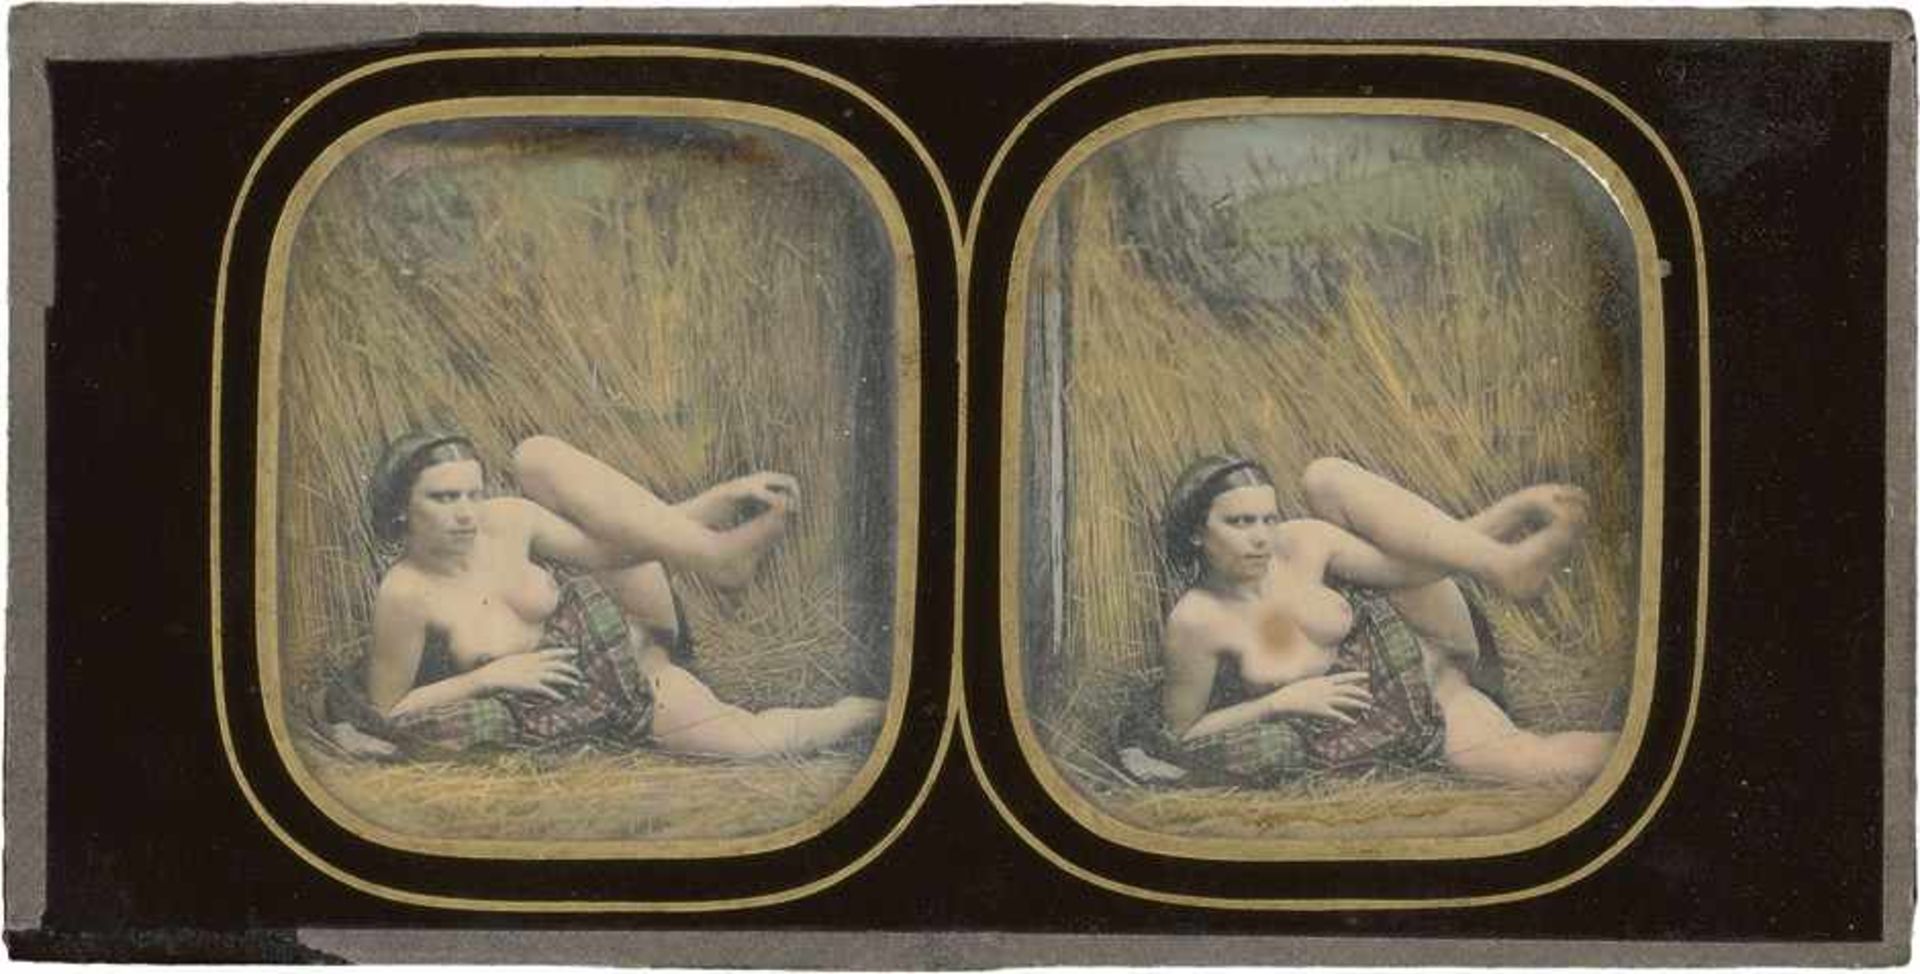 Daguerreotypes: Reclining semi-nude womanReclining semi-nude woman. 1850s. Stereo daguerreotype,